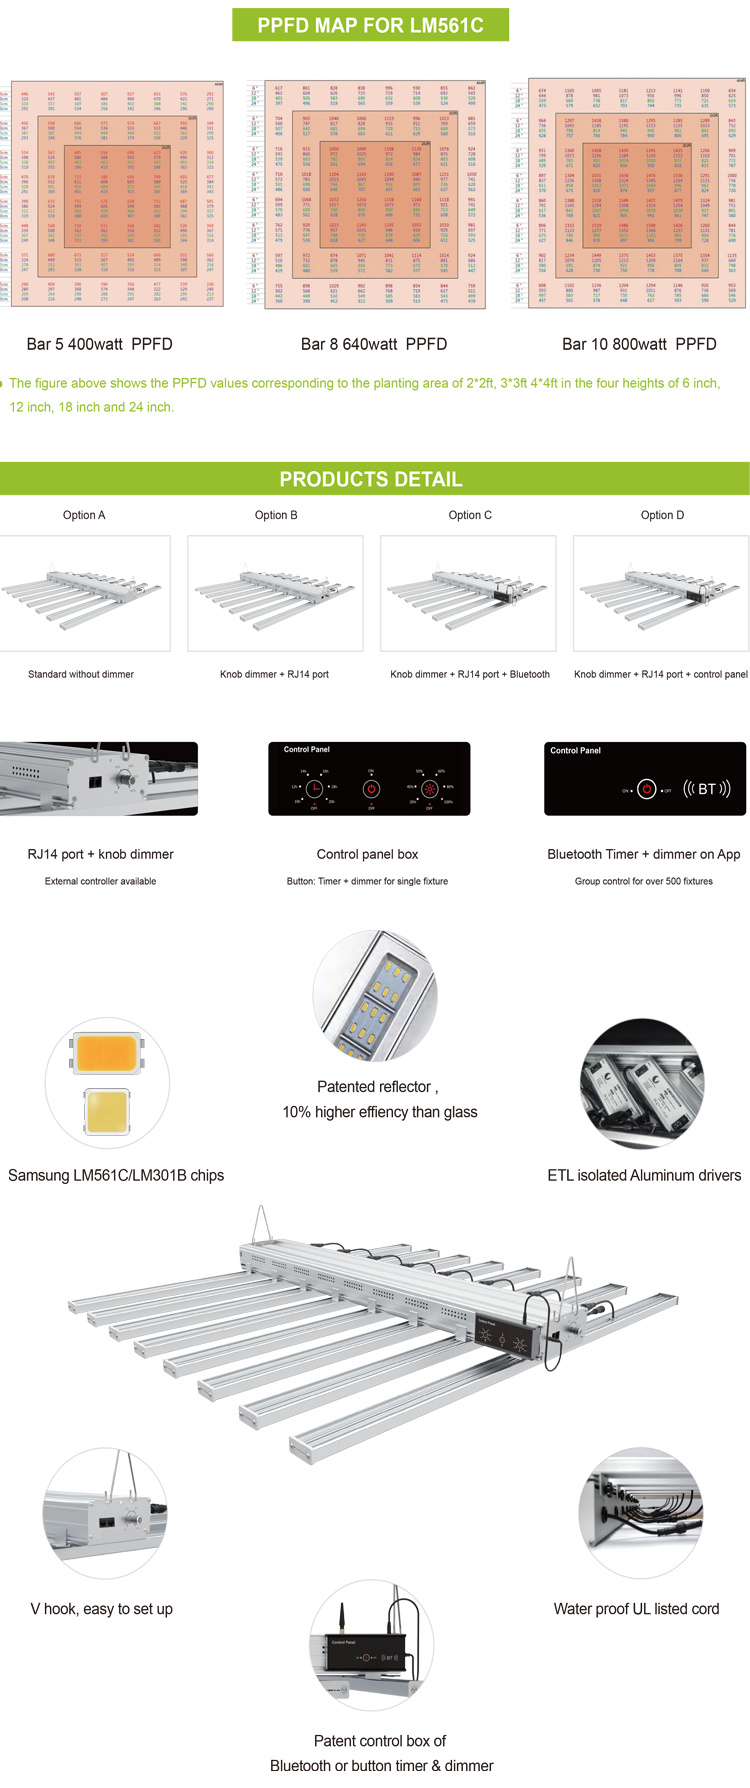 Dimmable 1200 Watt HPS COB LED Grow Light Ebay 800W Samsung Lm561c 301b